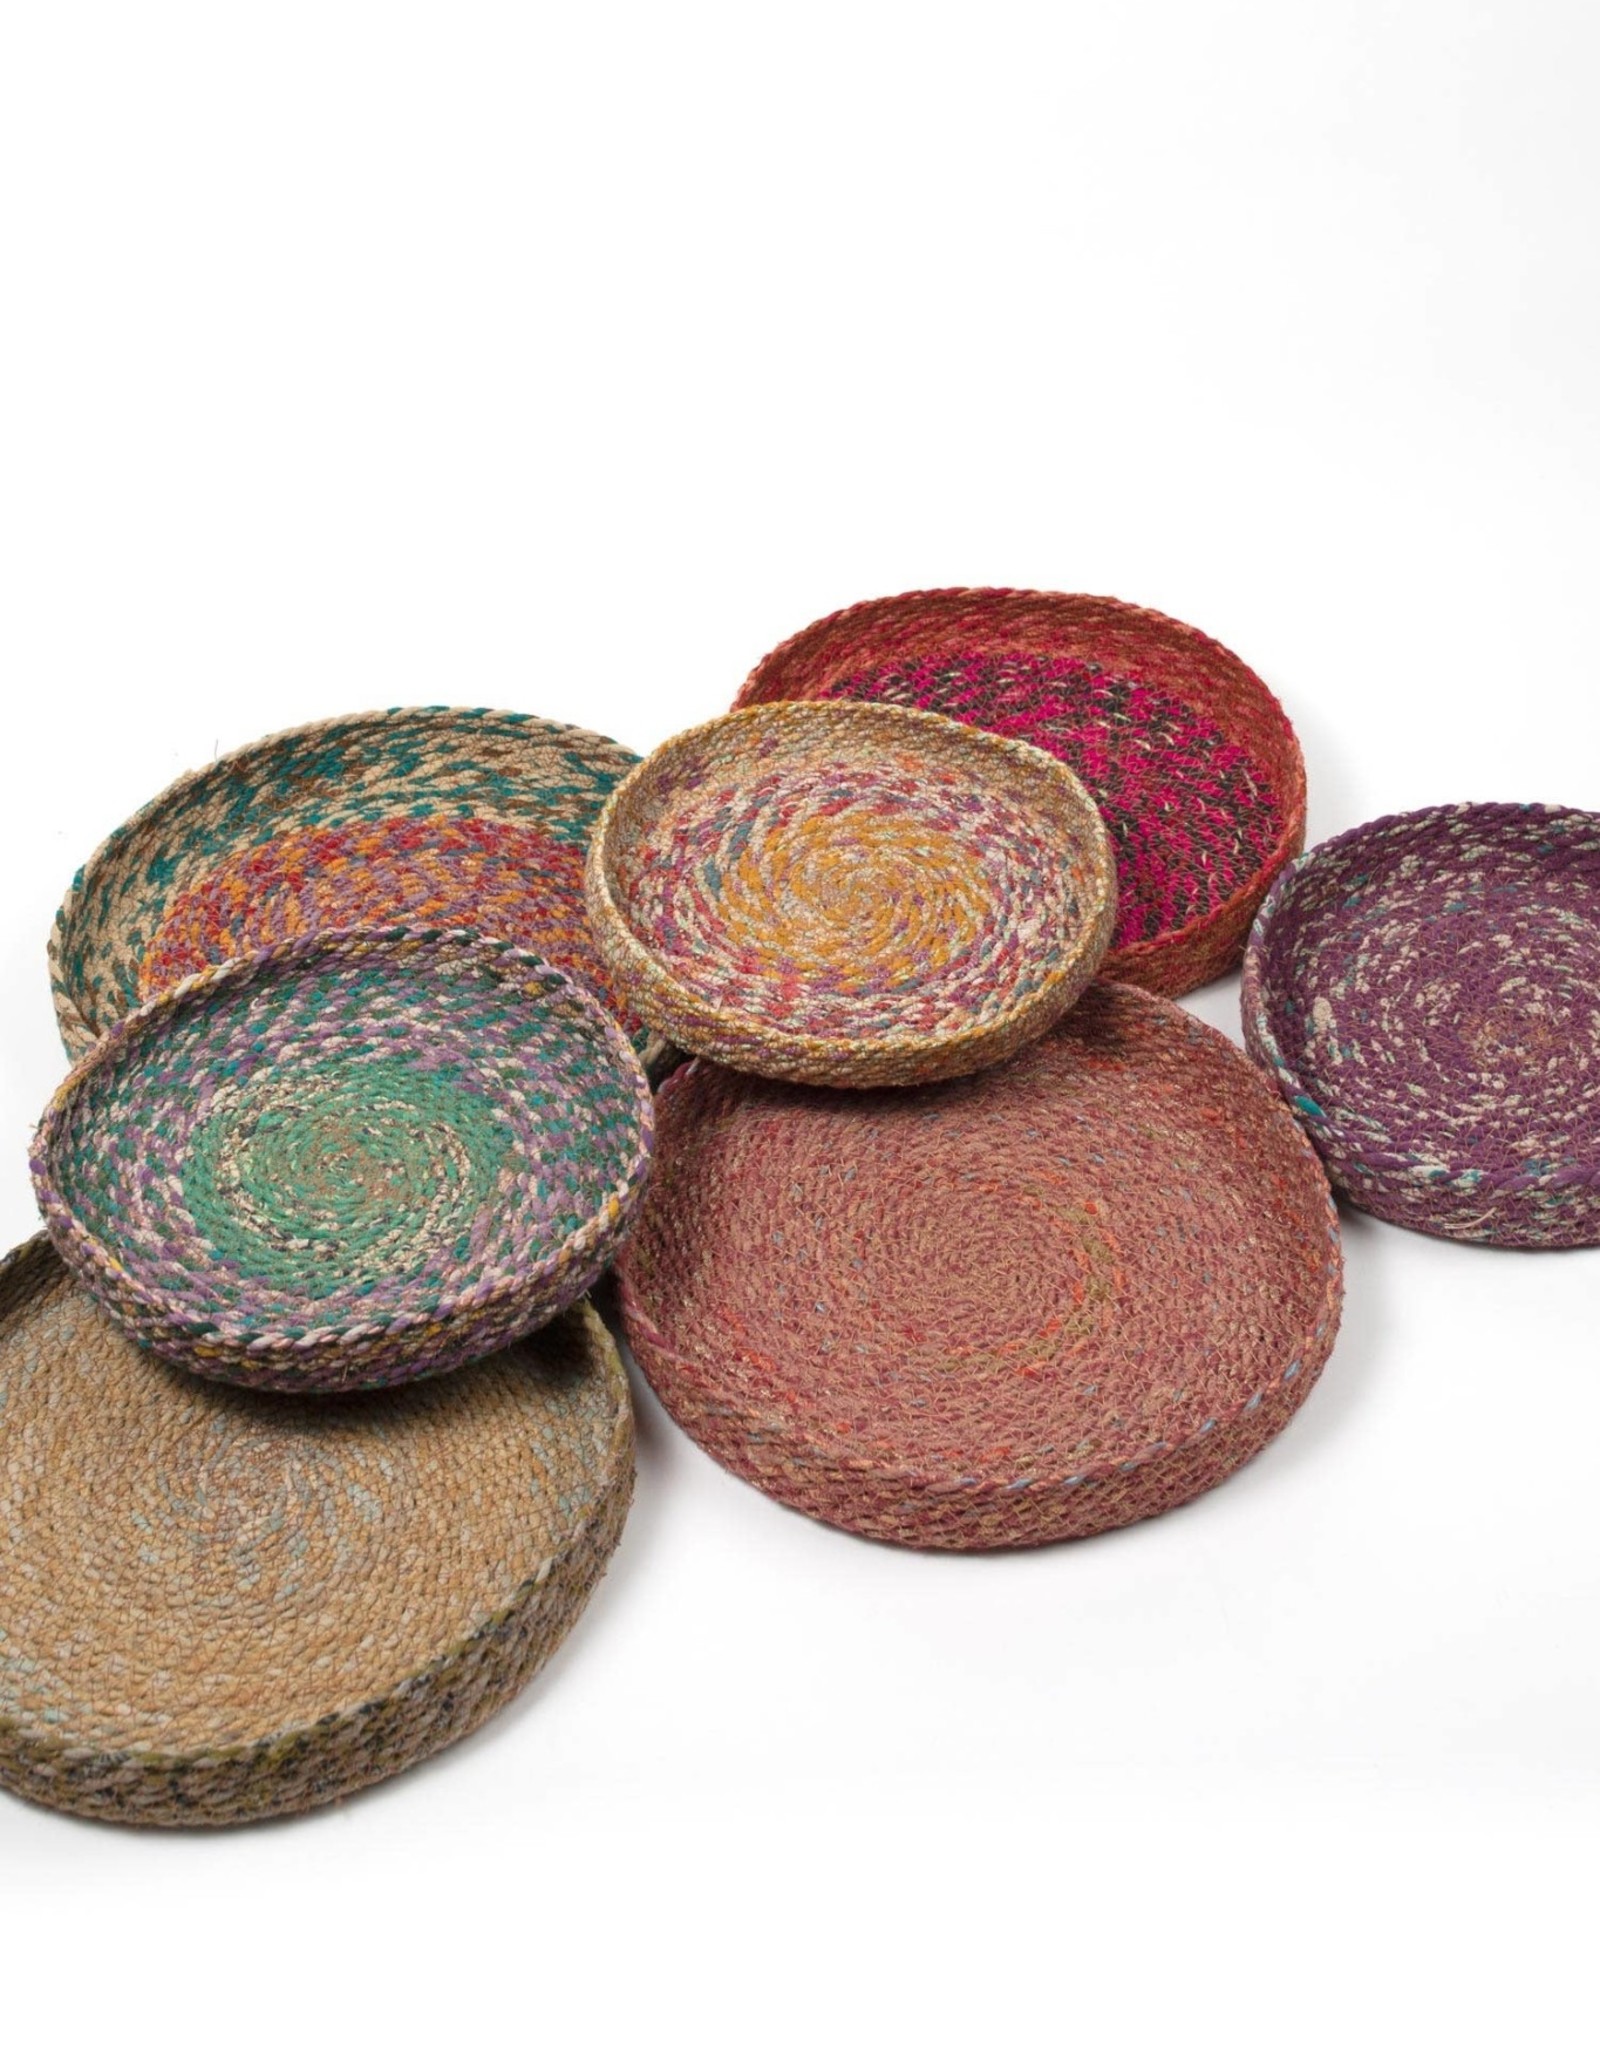 Ten Thousand Villages Stitched Sari Fabric Tray - 10"